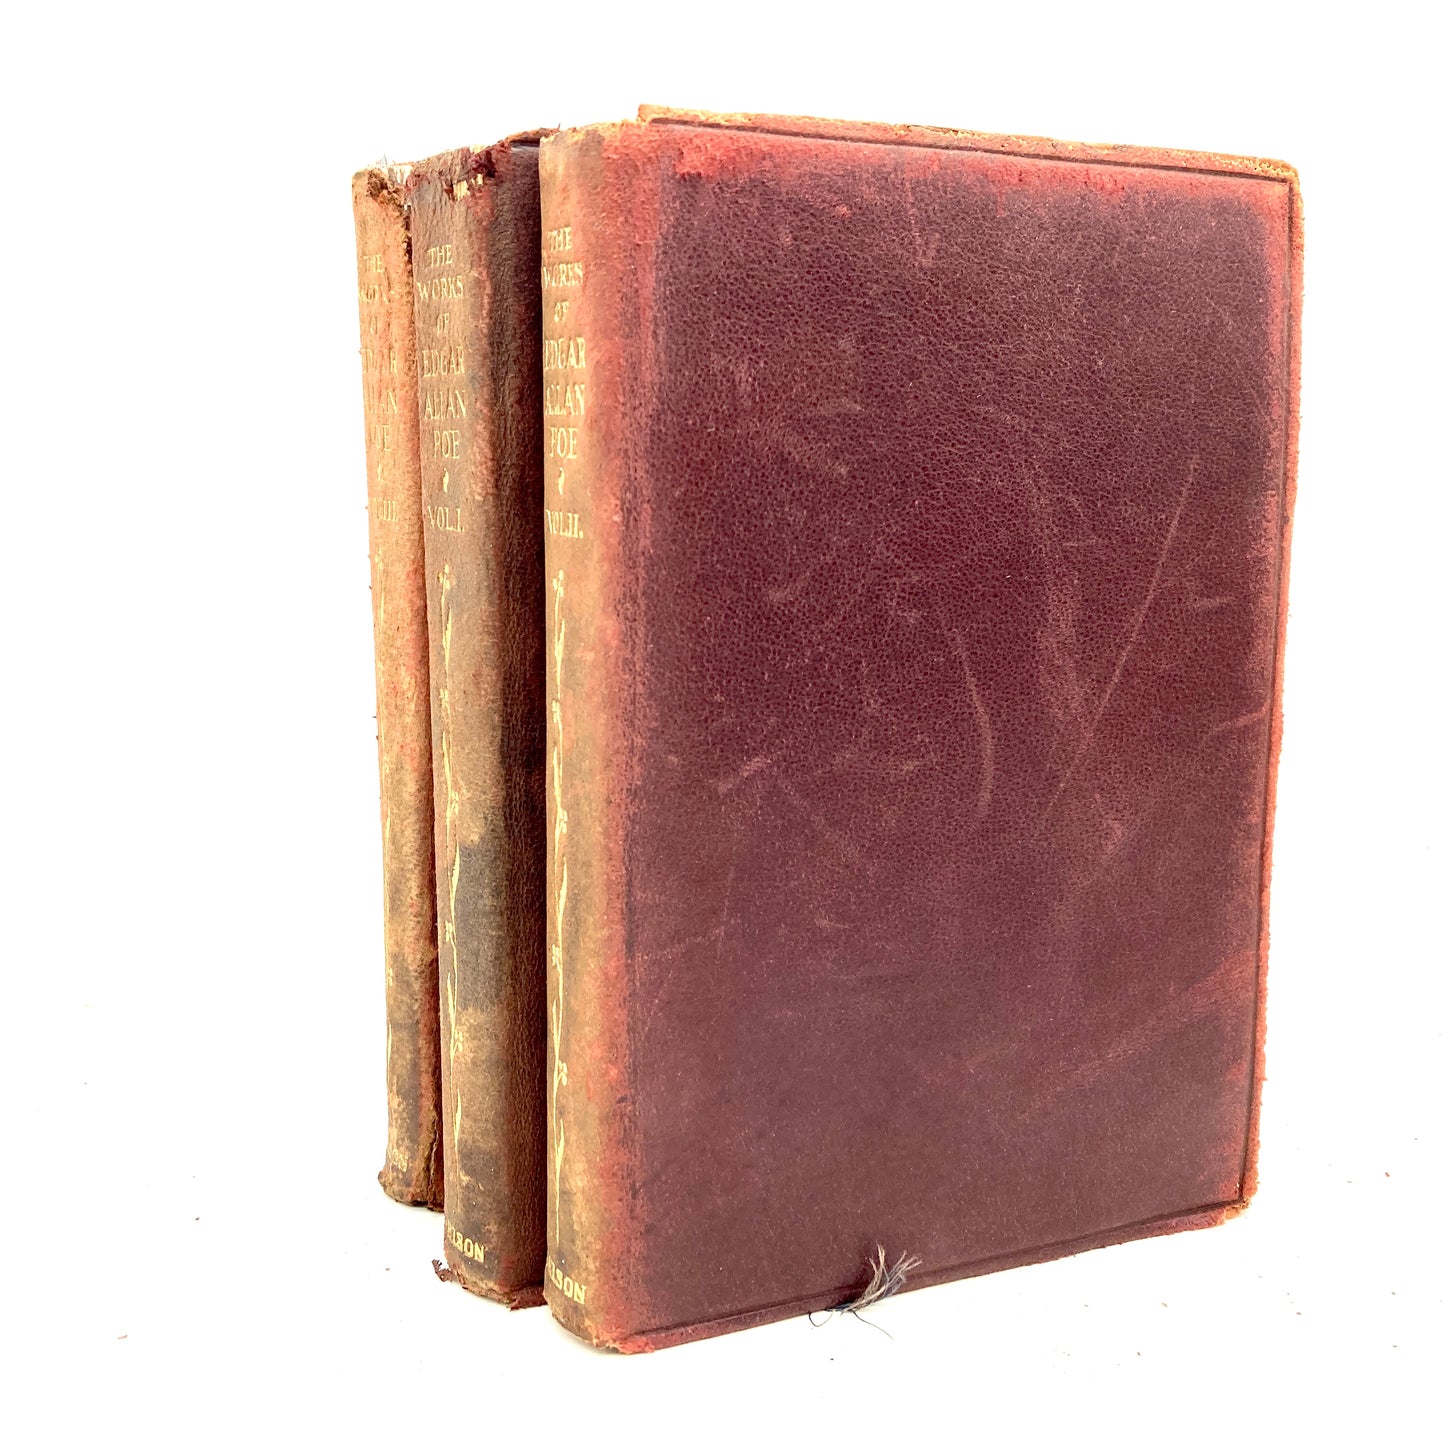 POE, Edgar Allan "The Works of Edgar Allan Poe" [Thomas Nelson, 1905] Red Leather